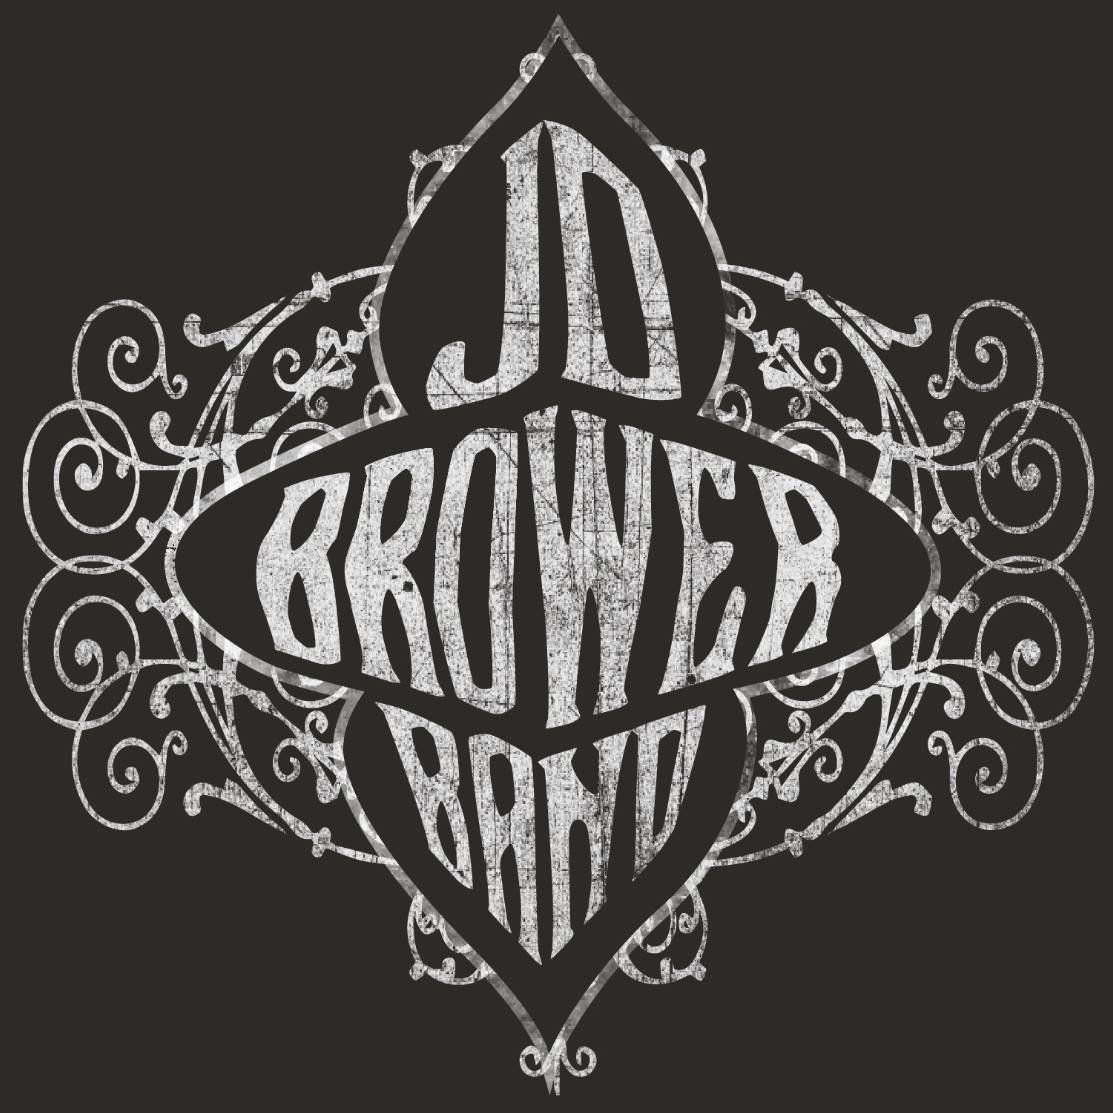 JD Brower Band